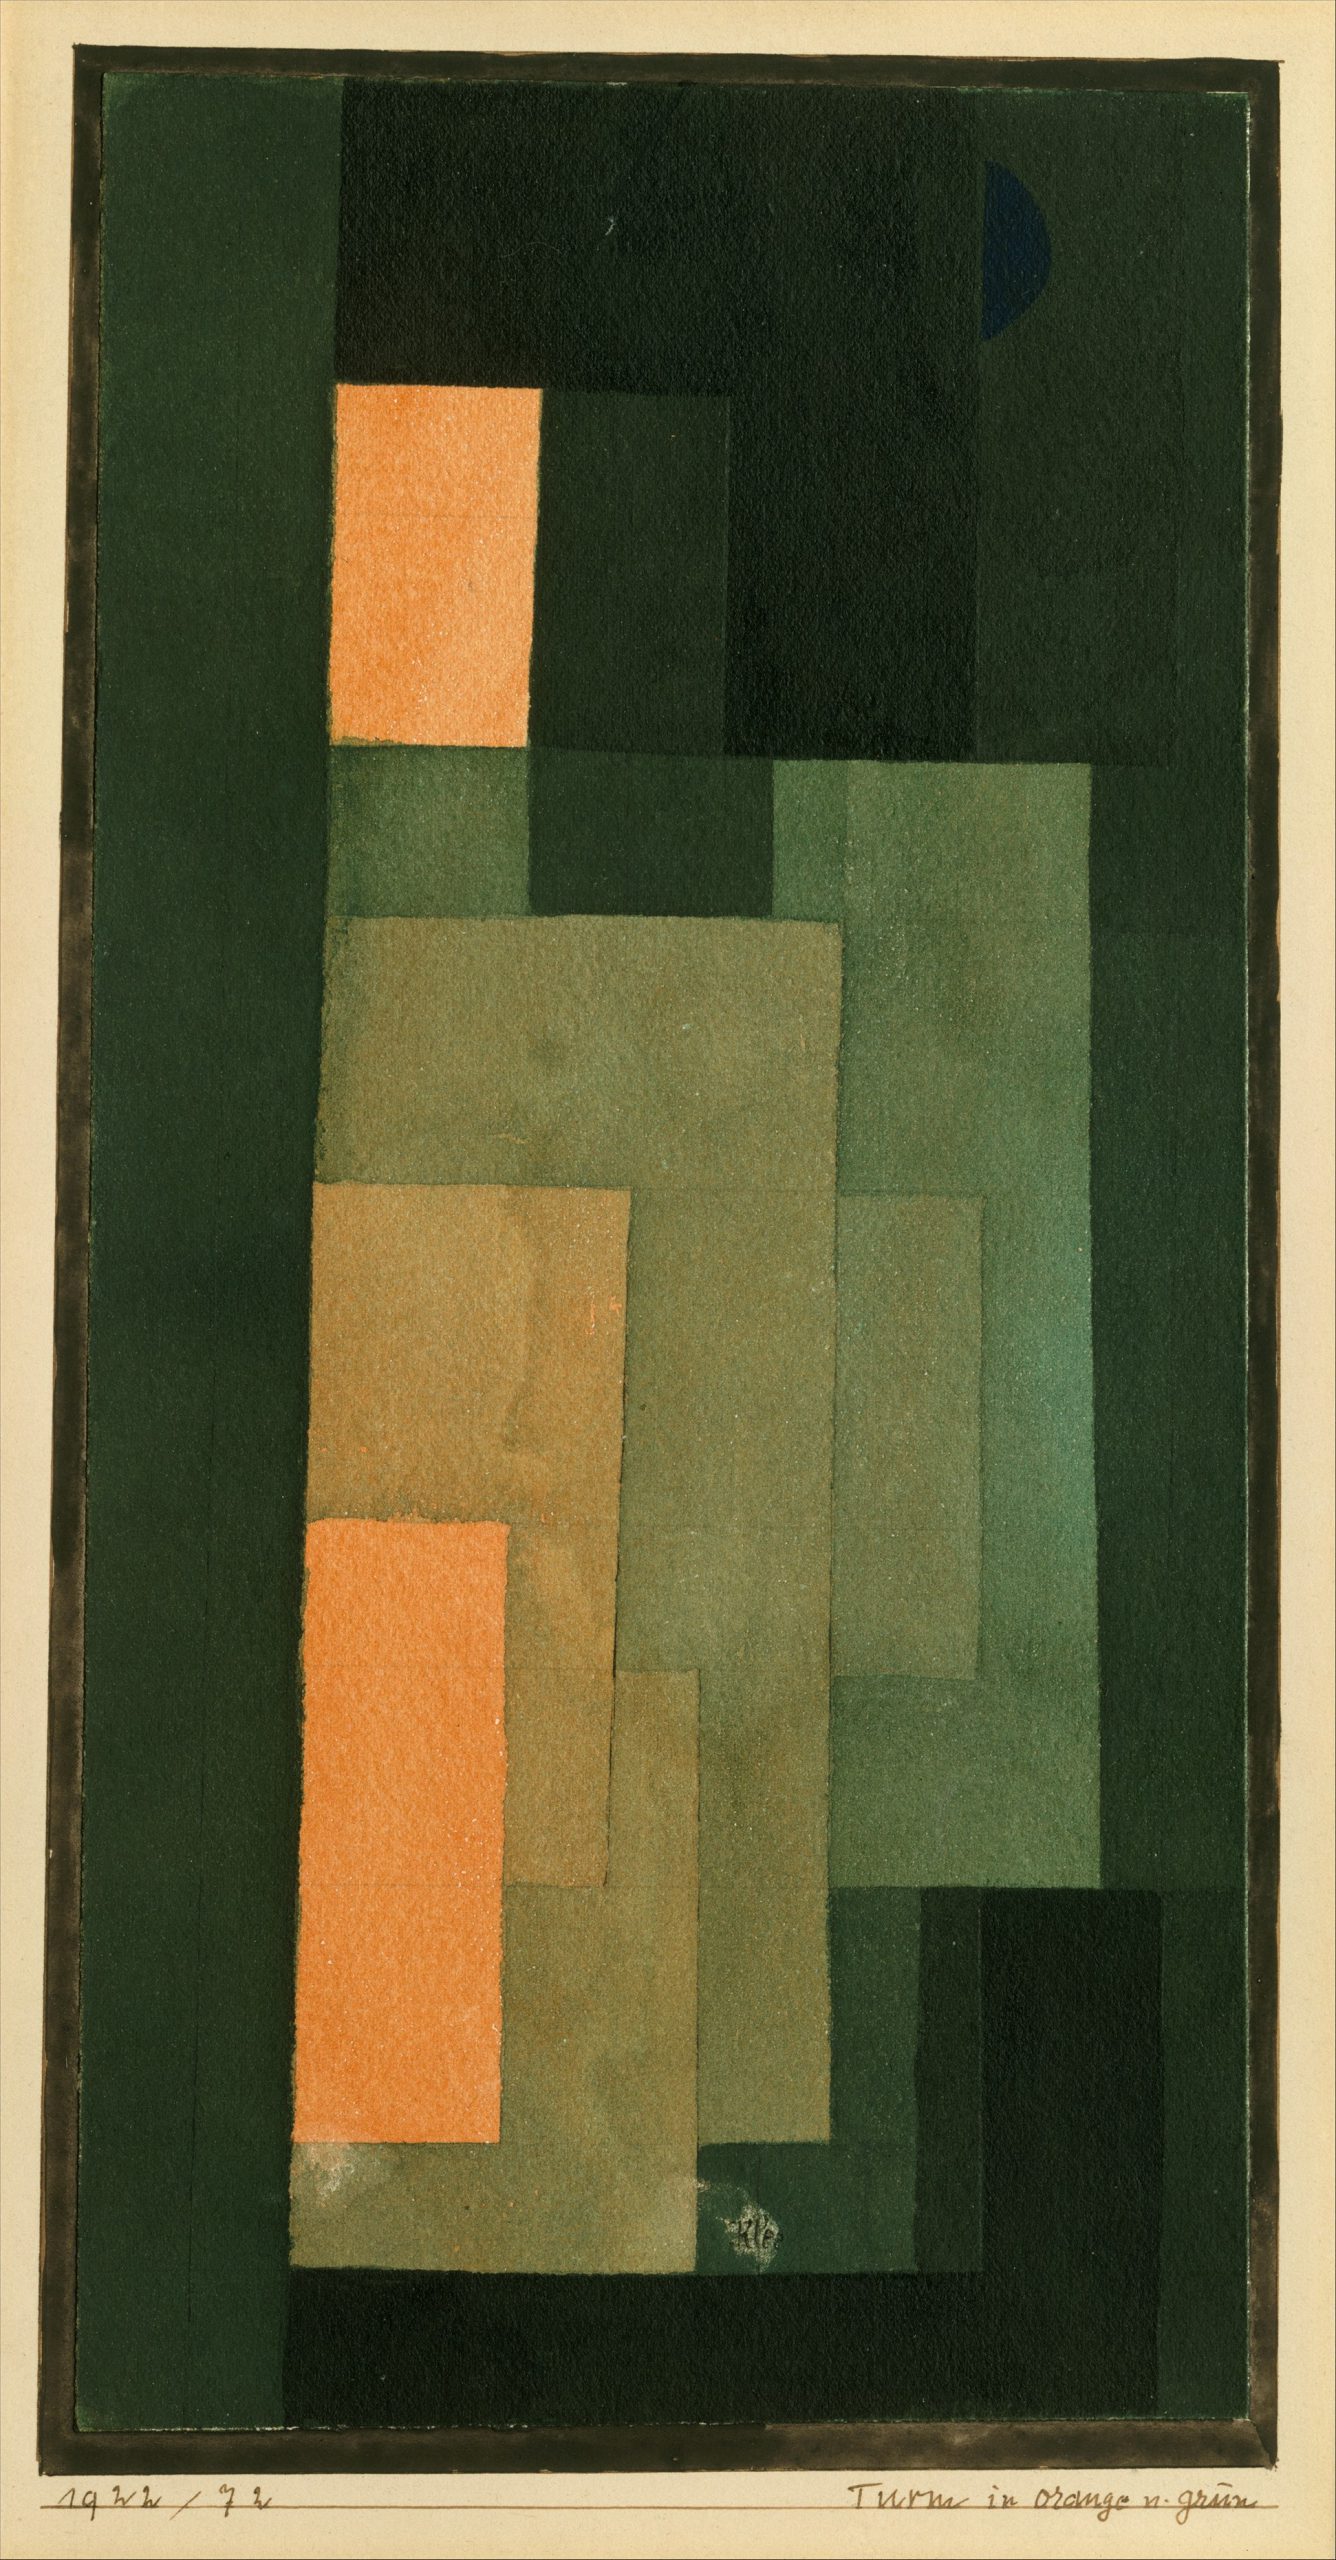 Klee, Paul. 1922. «Tower in Orange and Green» [Aquarelle] 